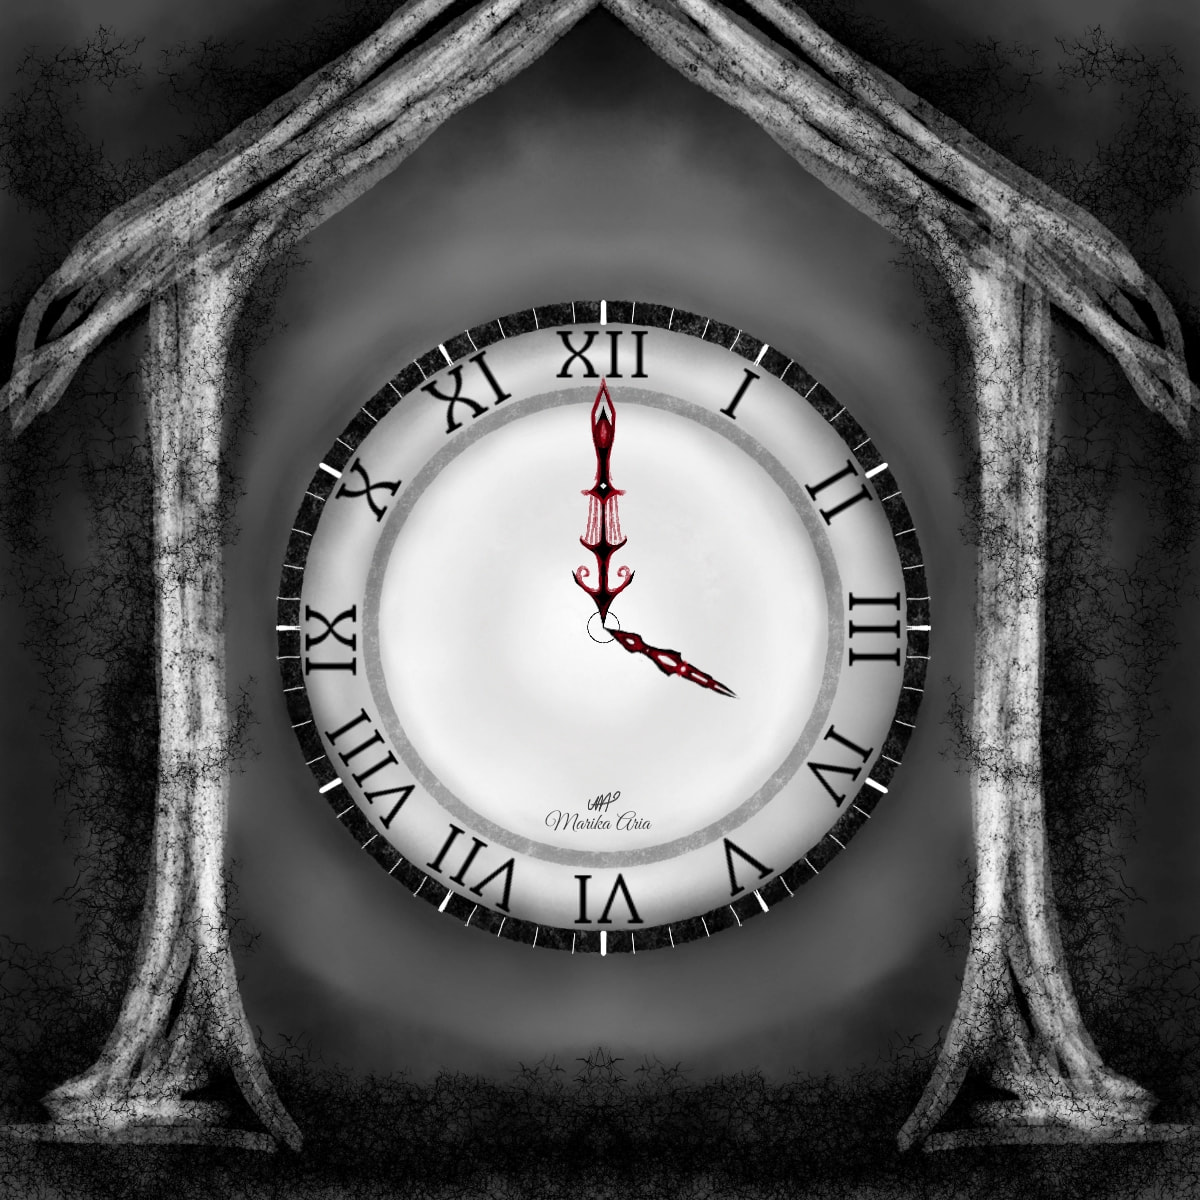 14th Clock "Tick-tock, tick-tock, time is lost" #inktober #Inktober2018 #MarikaAria #clock #blackandwhite #MAft